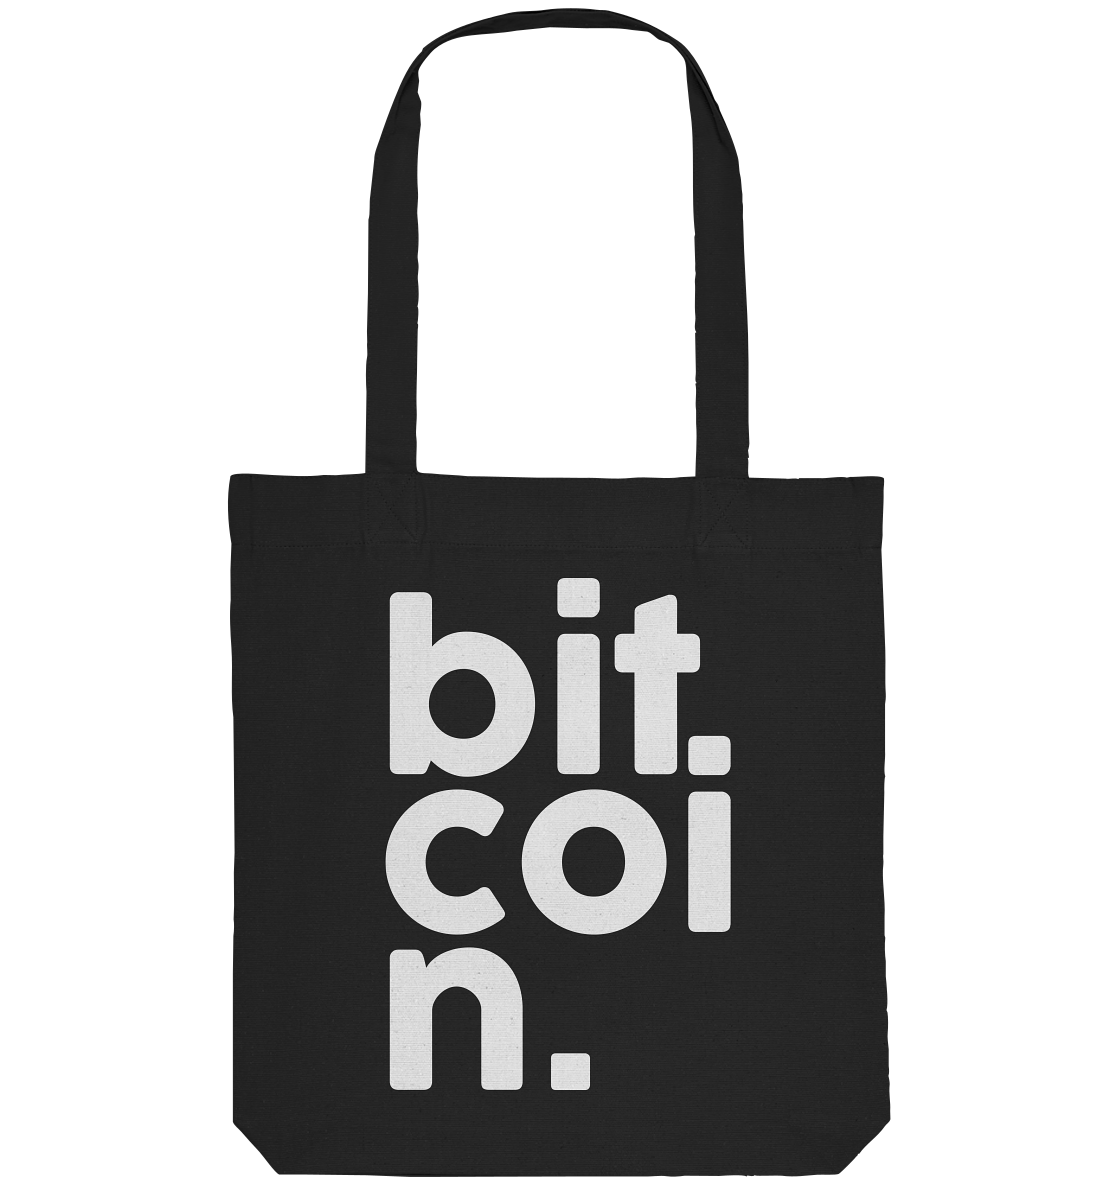 Bitcoin "bit coi n"  - Organic Tote-Bag